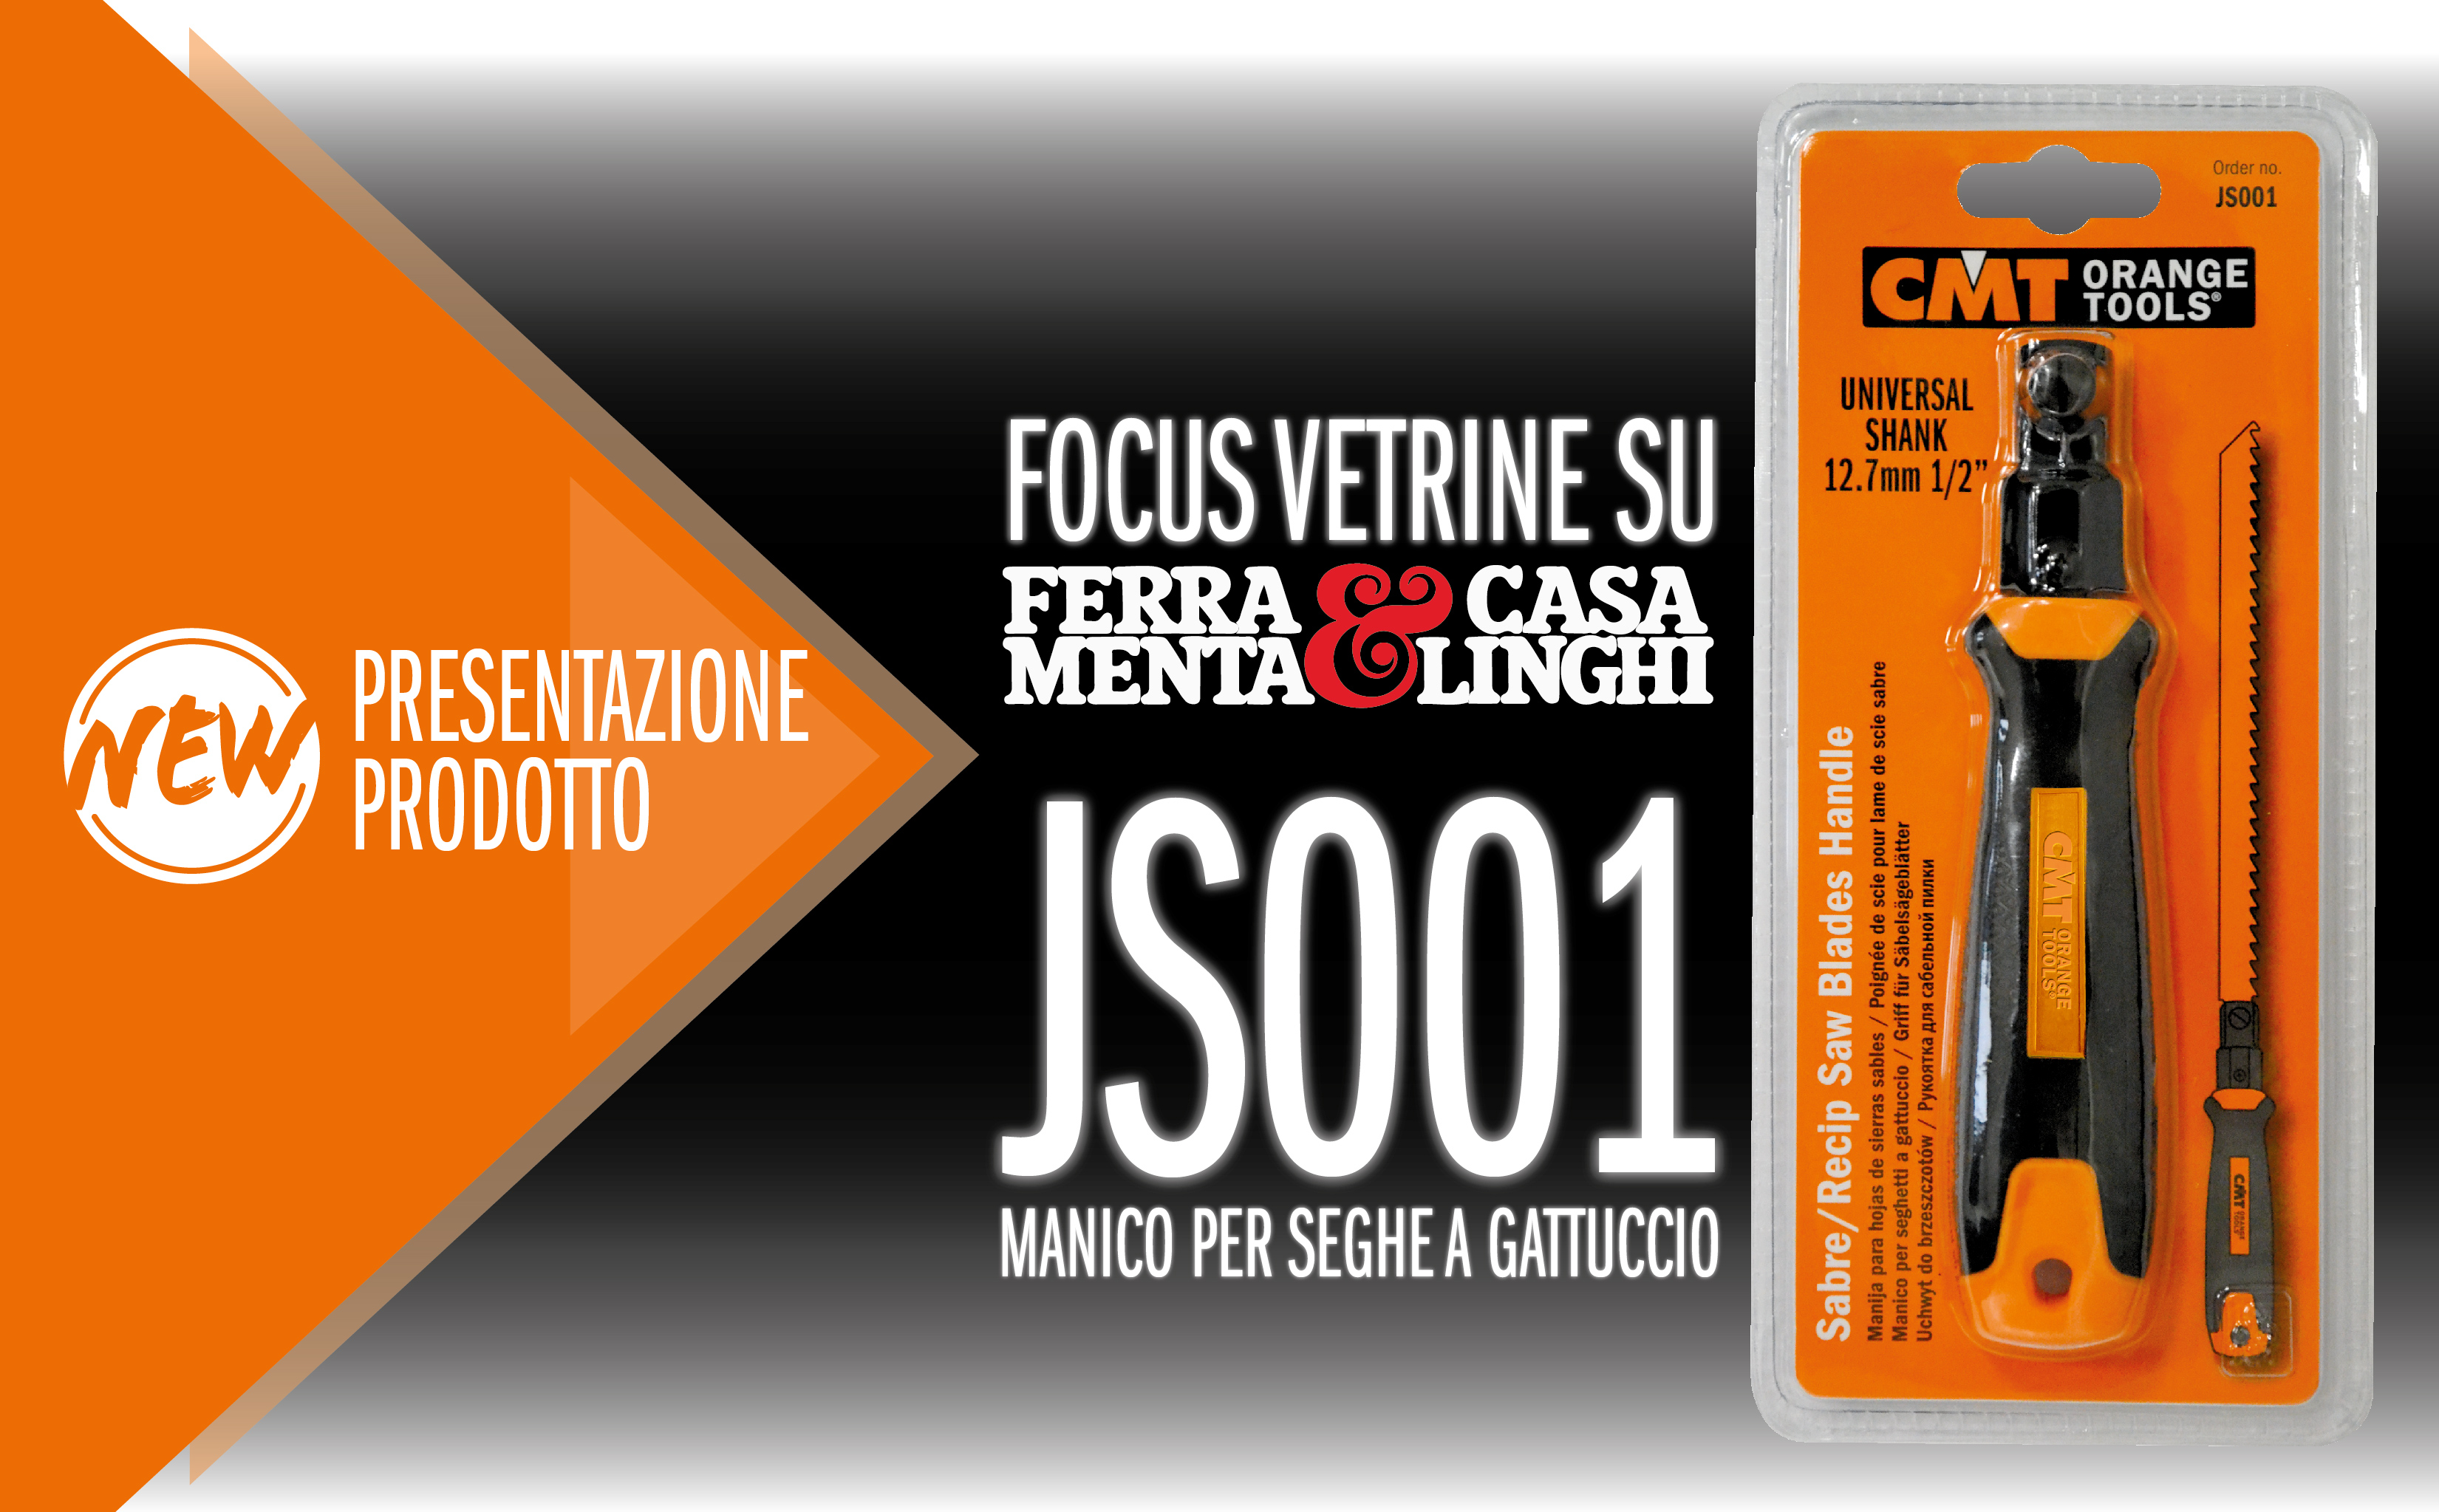 Italian magazine &quot;Ferramenta&amp;Casalinghi&quot; released a special Focus review on New CMT JS001